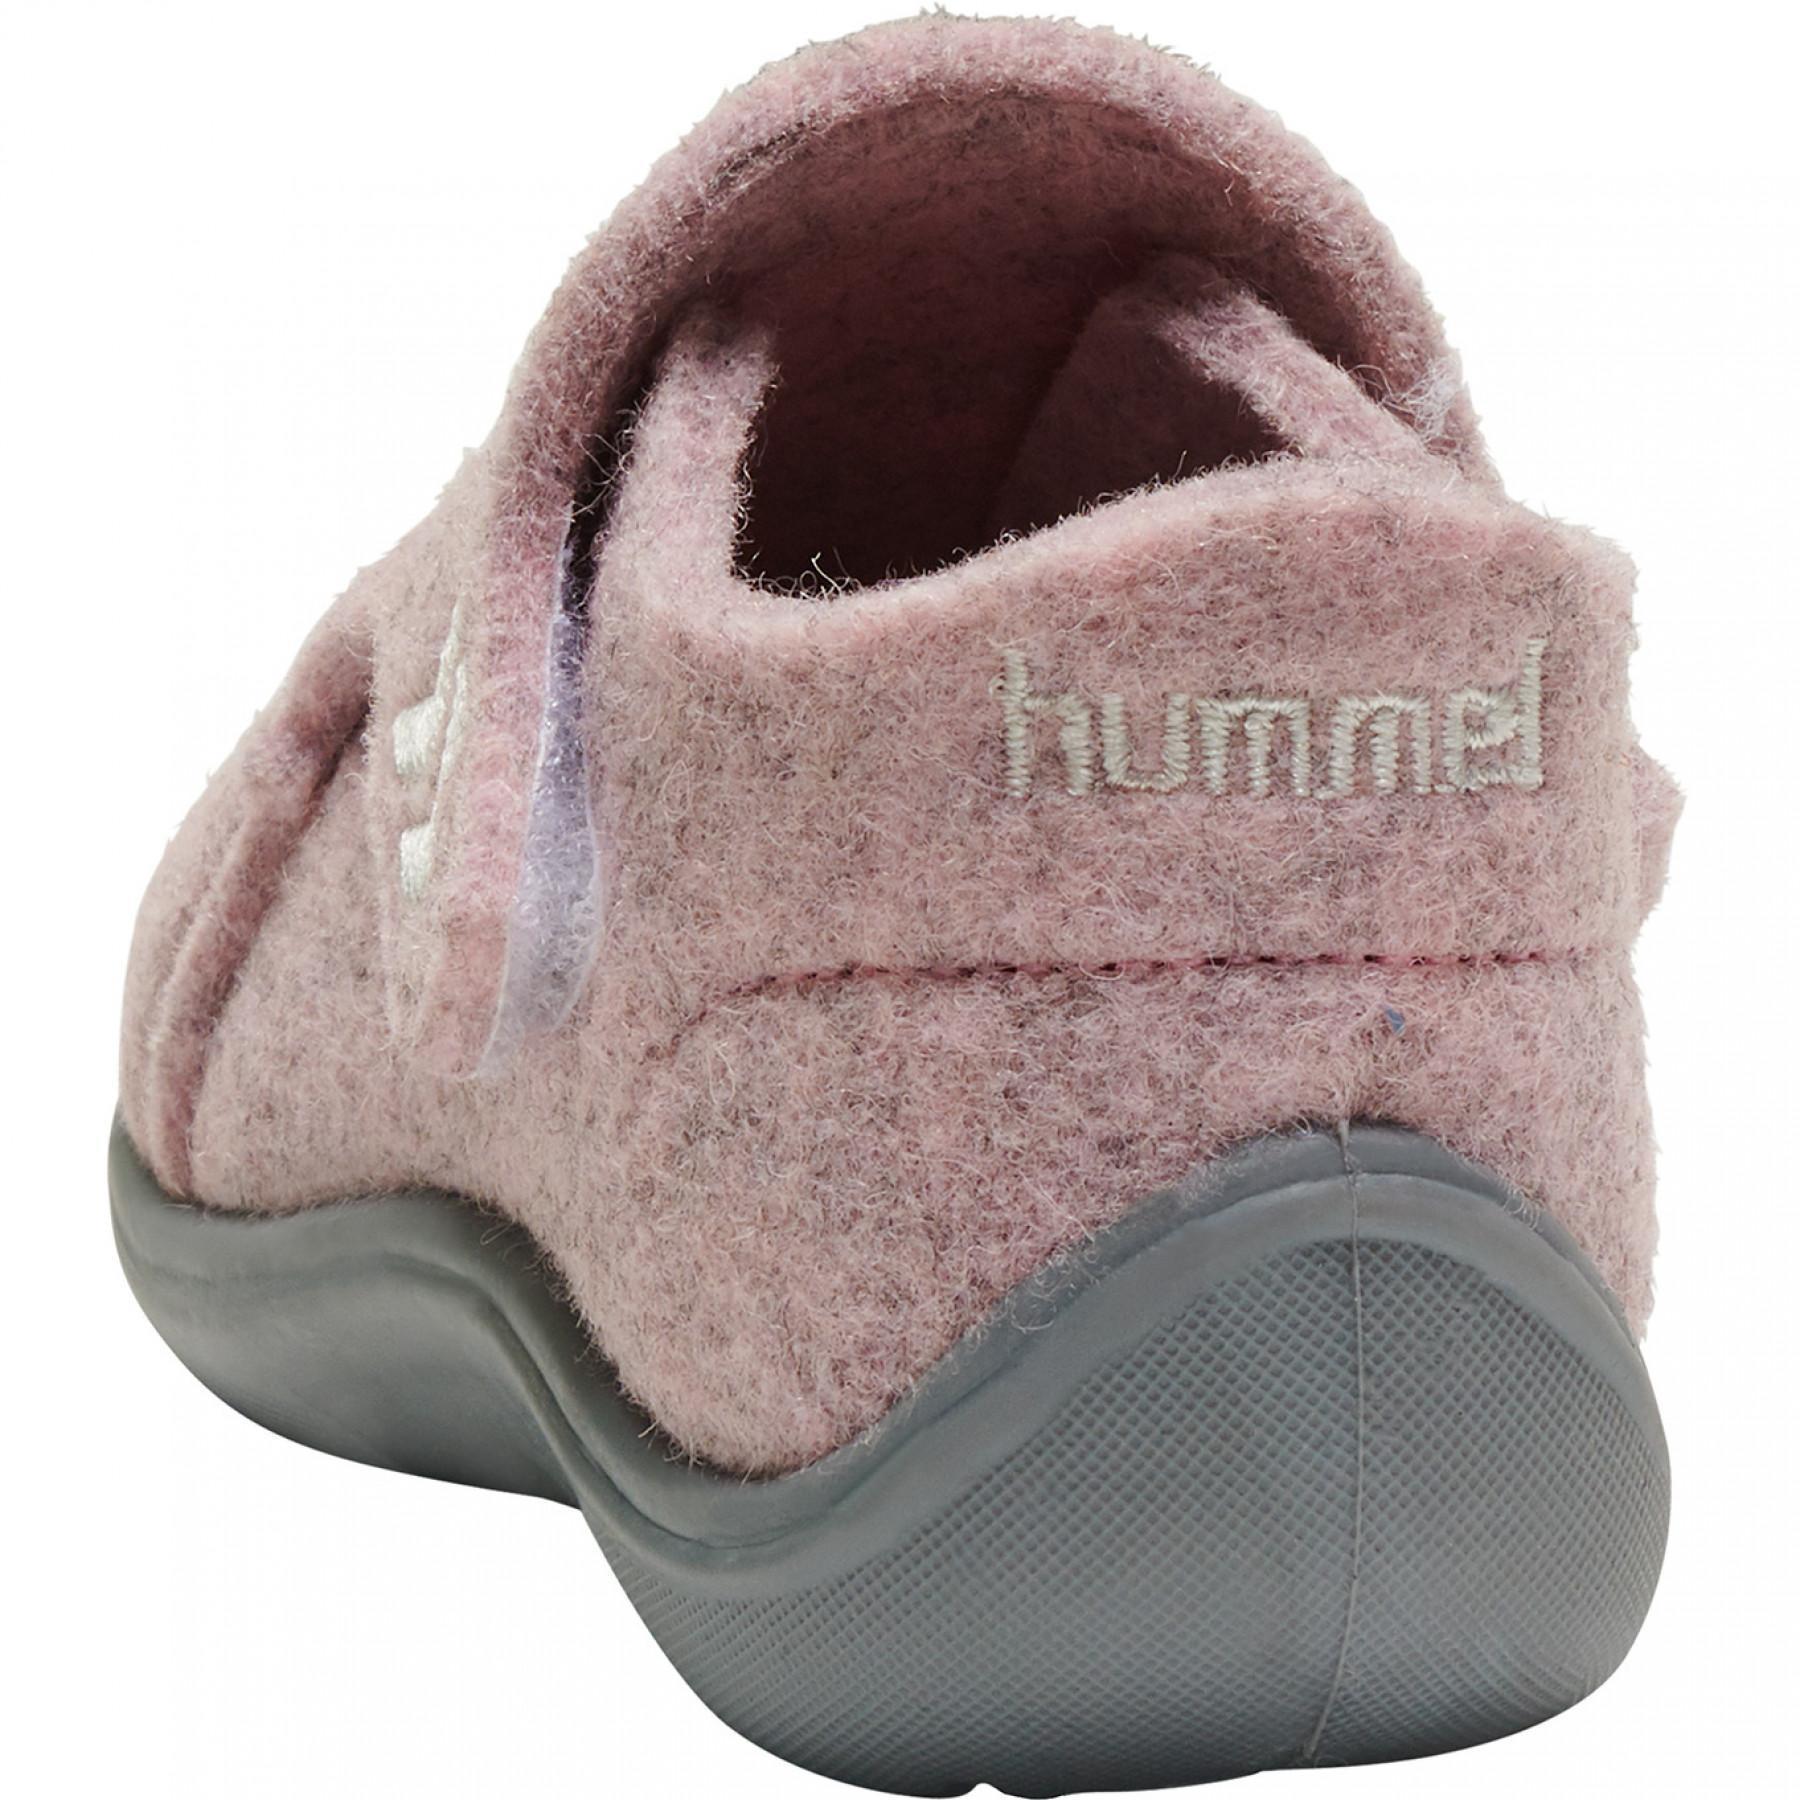 Baskets enfant Hummel wool slipper